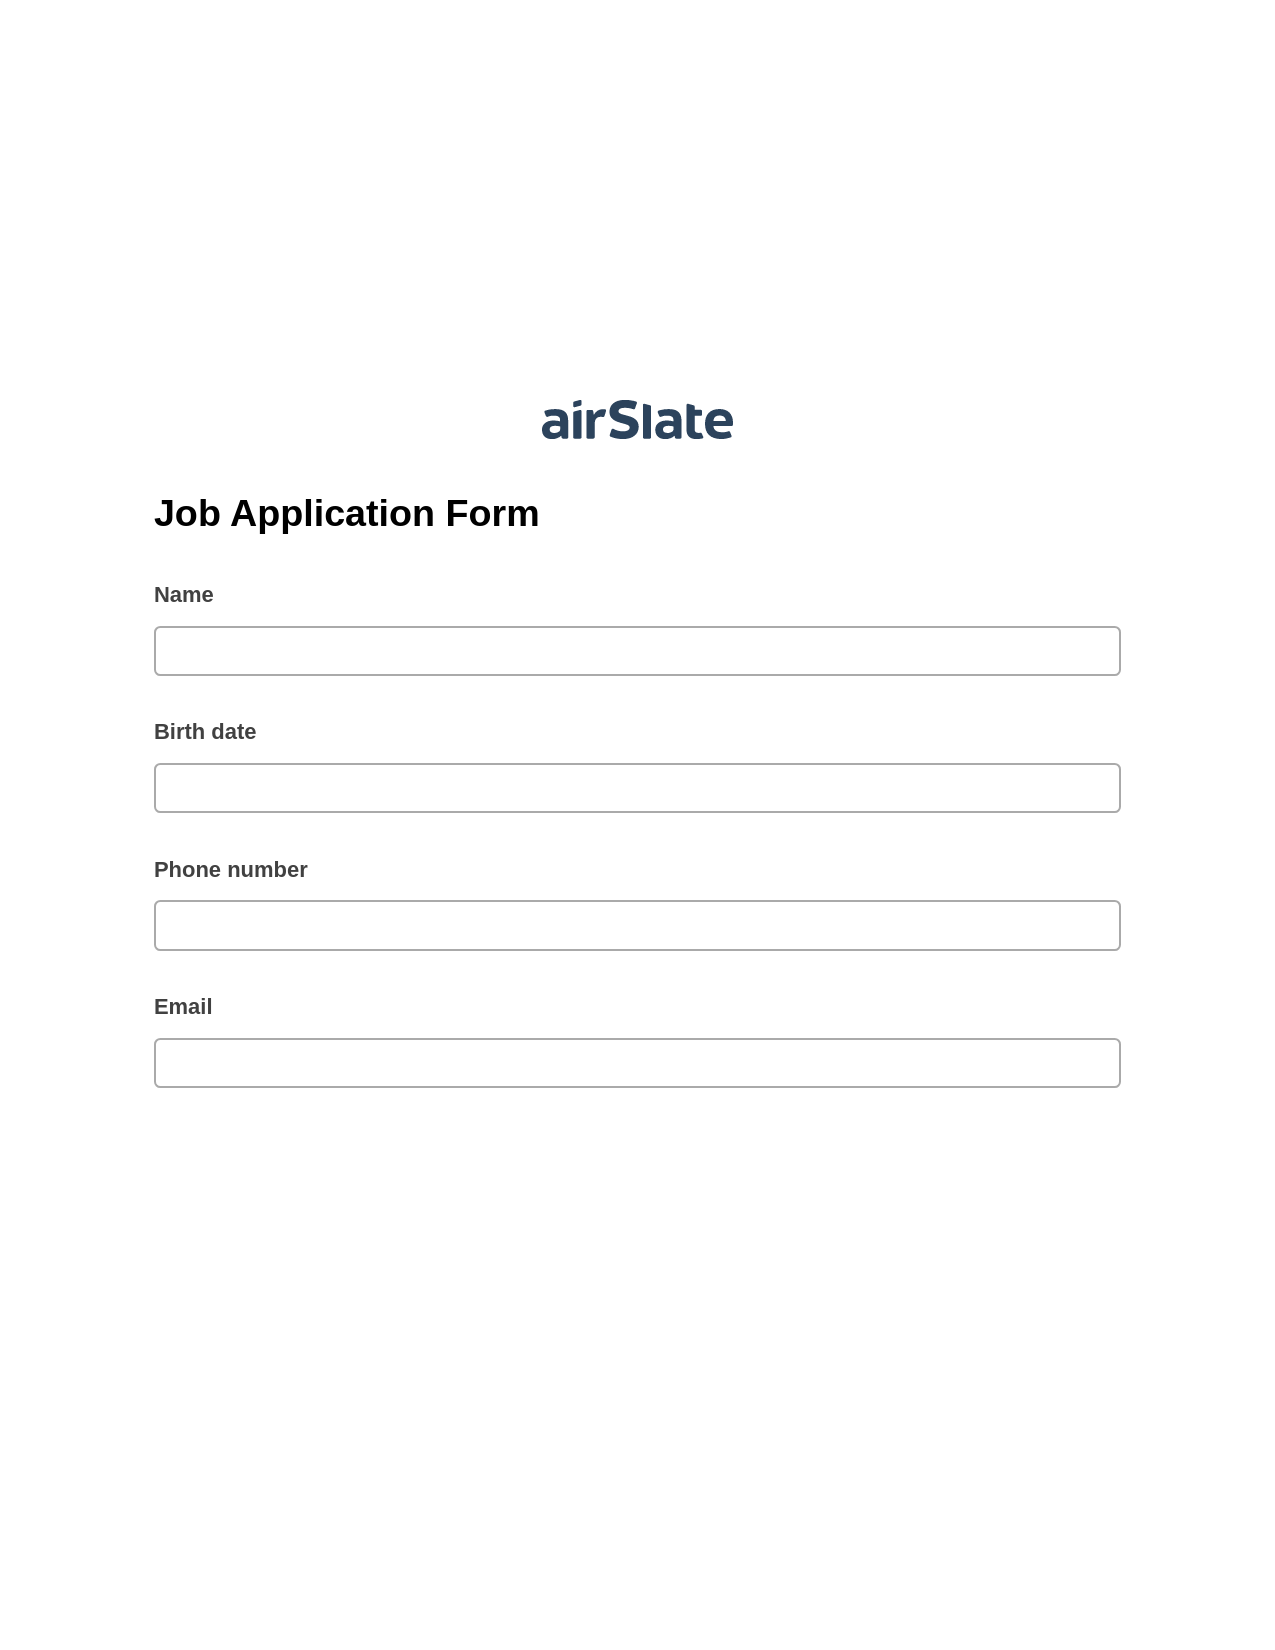 Multirole Job Application Form Pre-fill from Google Sheet Dropdown Options Bot, Export to MS Dynamics 365 Bot, Box Bot